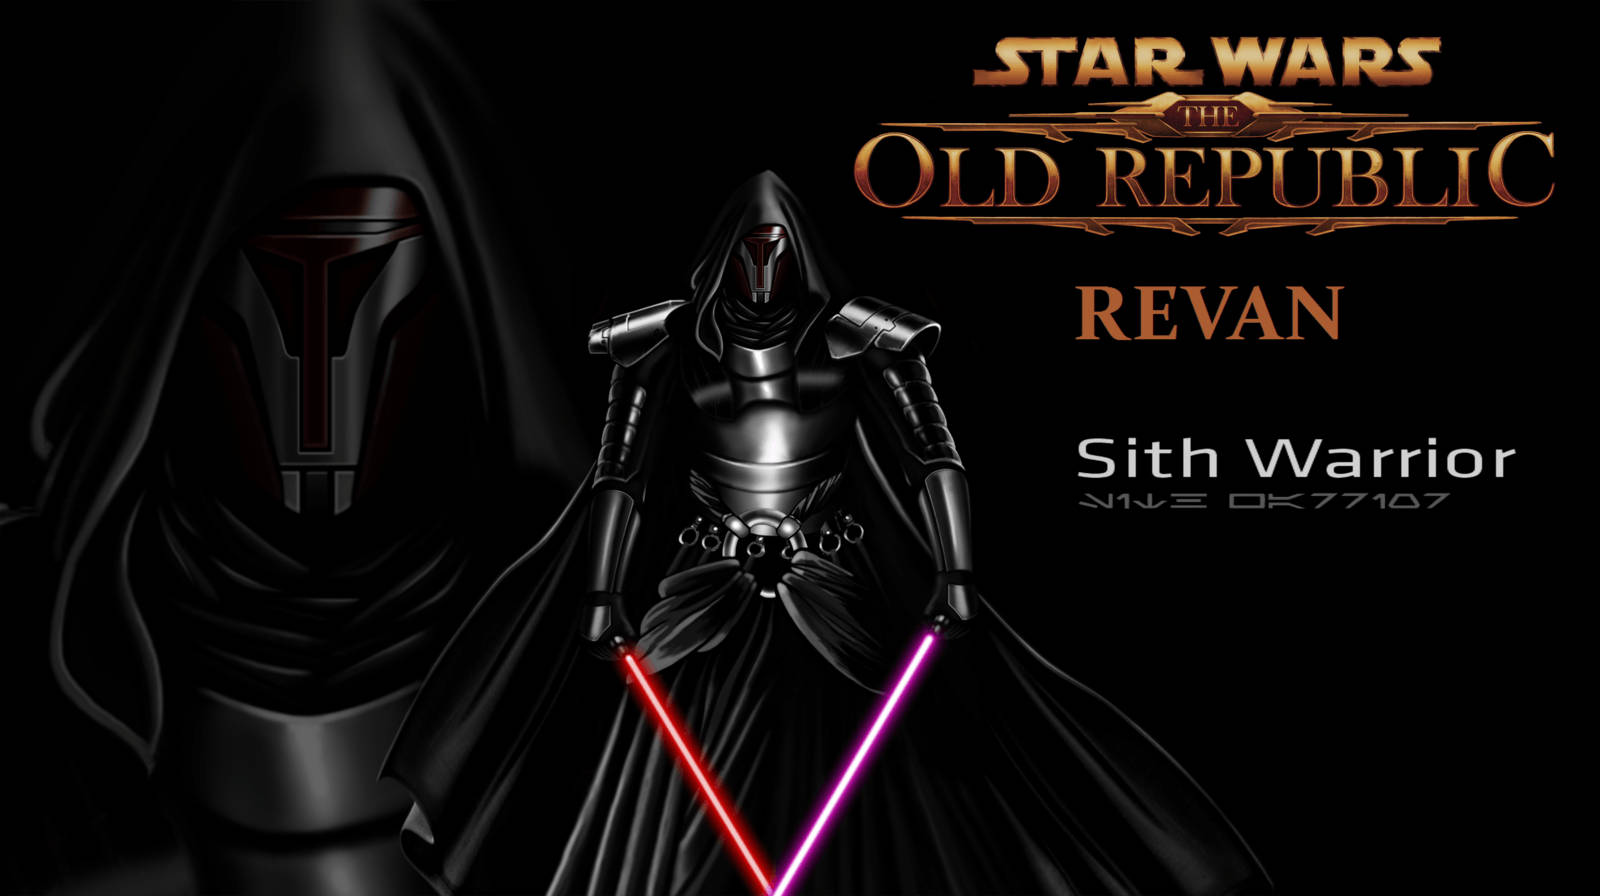 The Dark Side Of The Force Awakens - Darth Revan